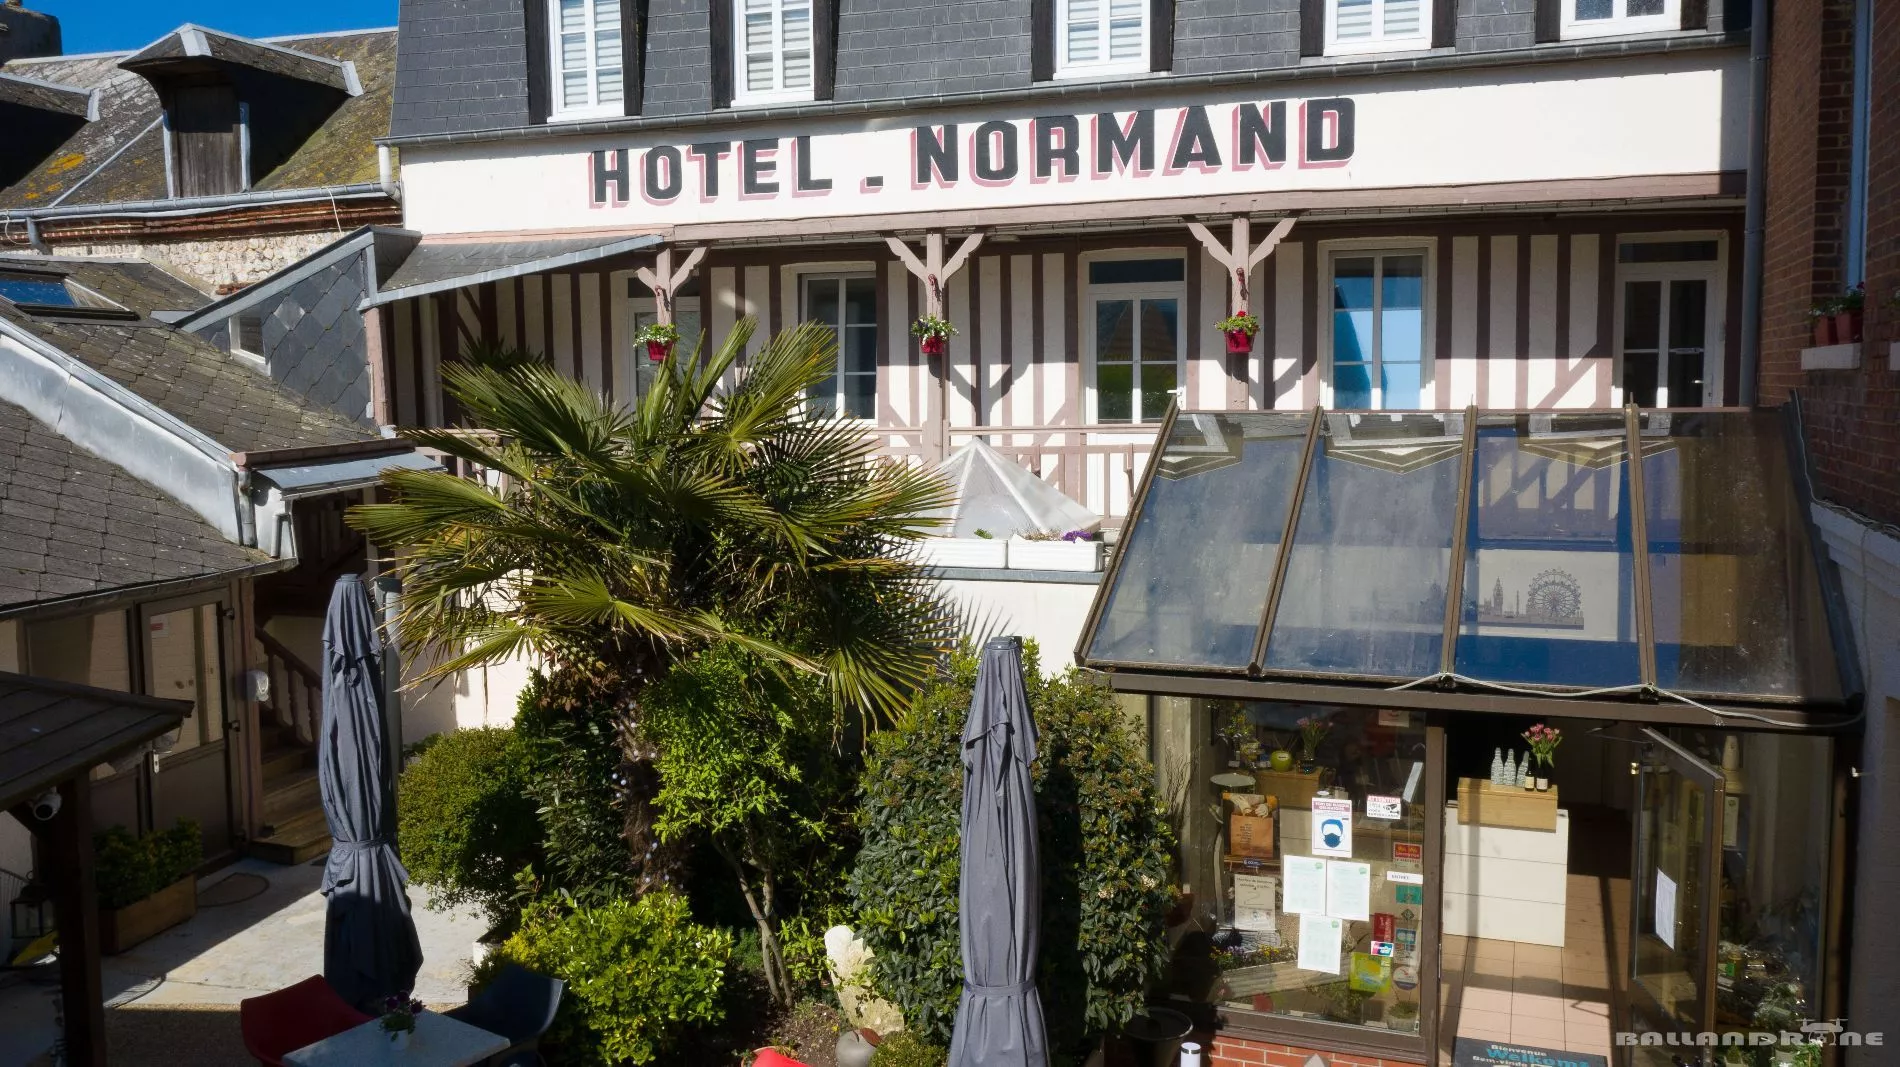 HOTEL RESTAURANT NORMAND